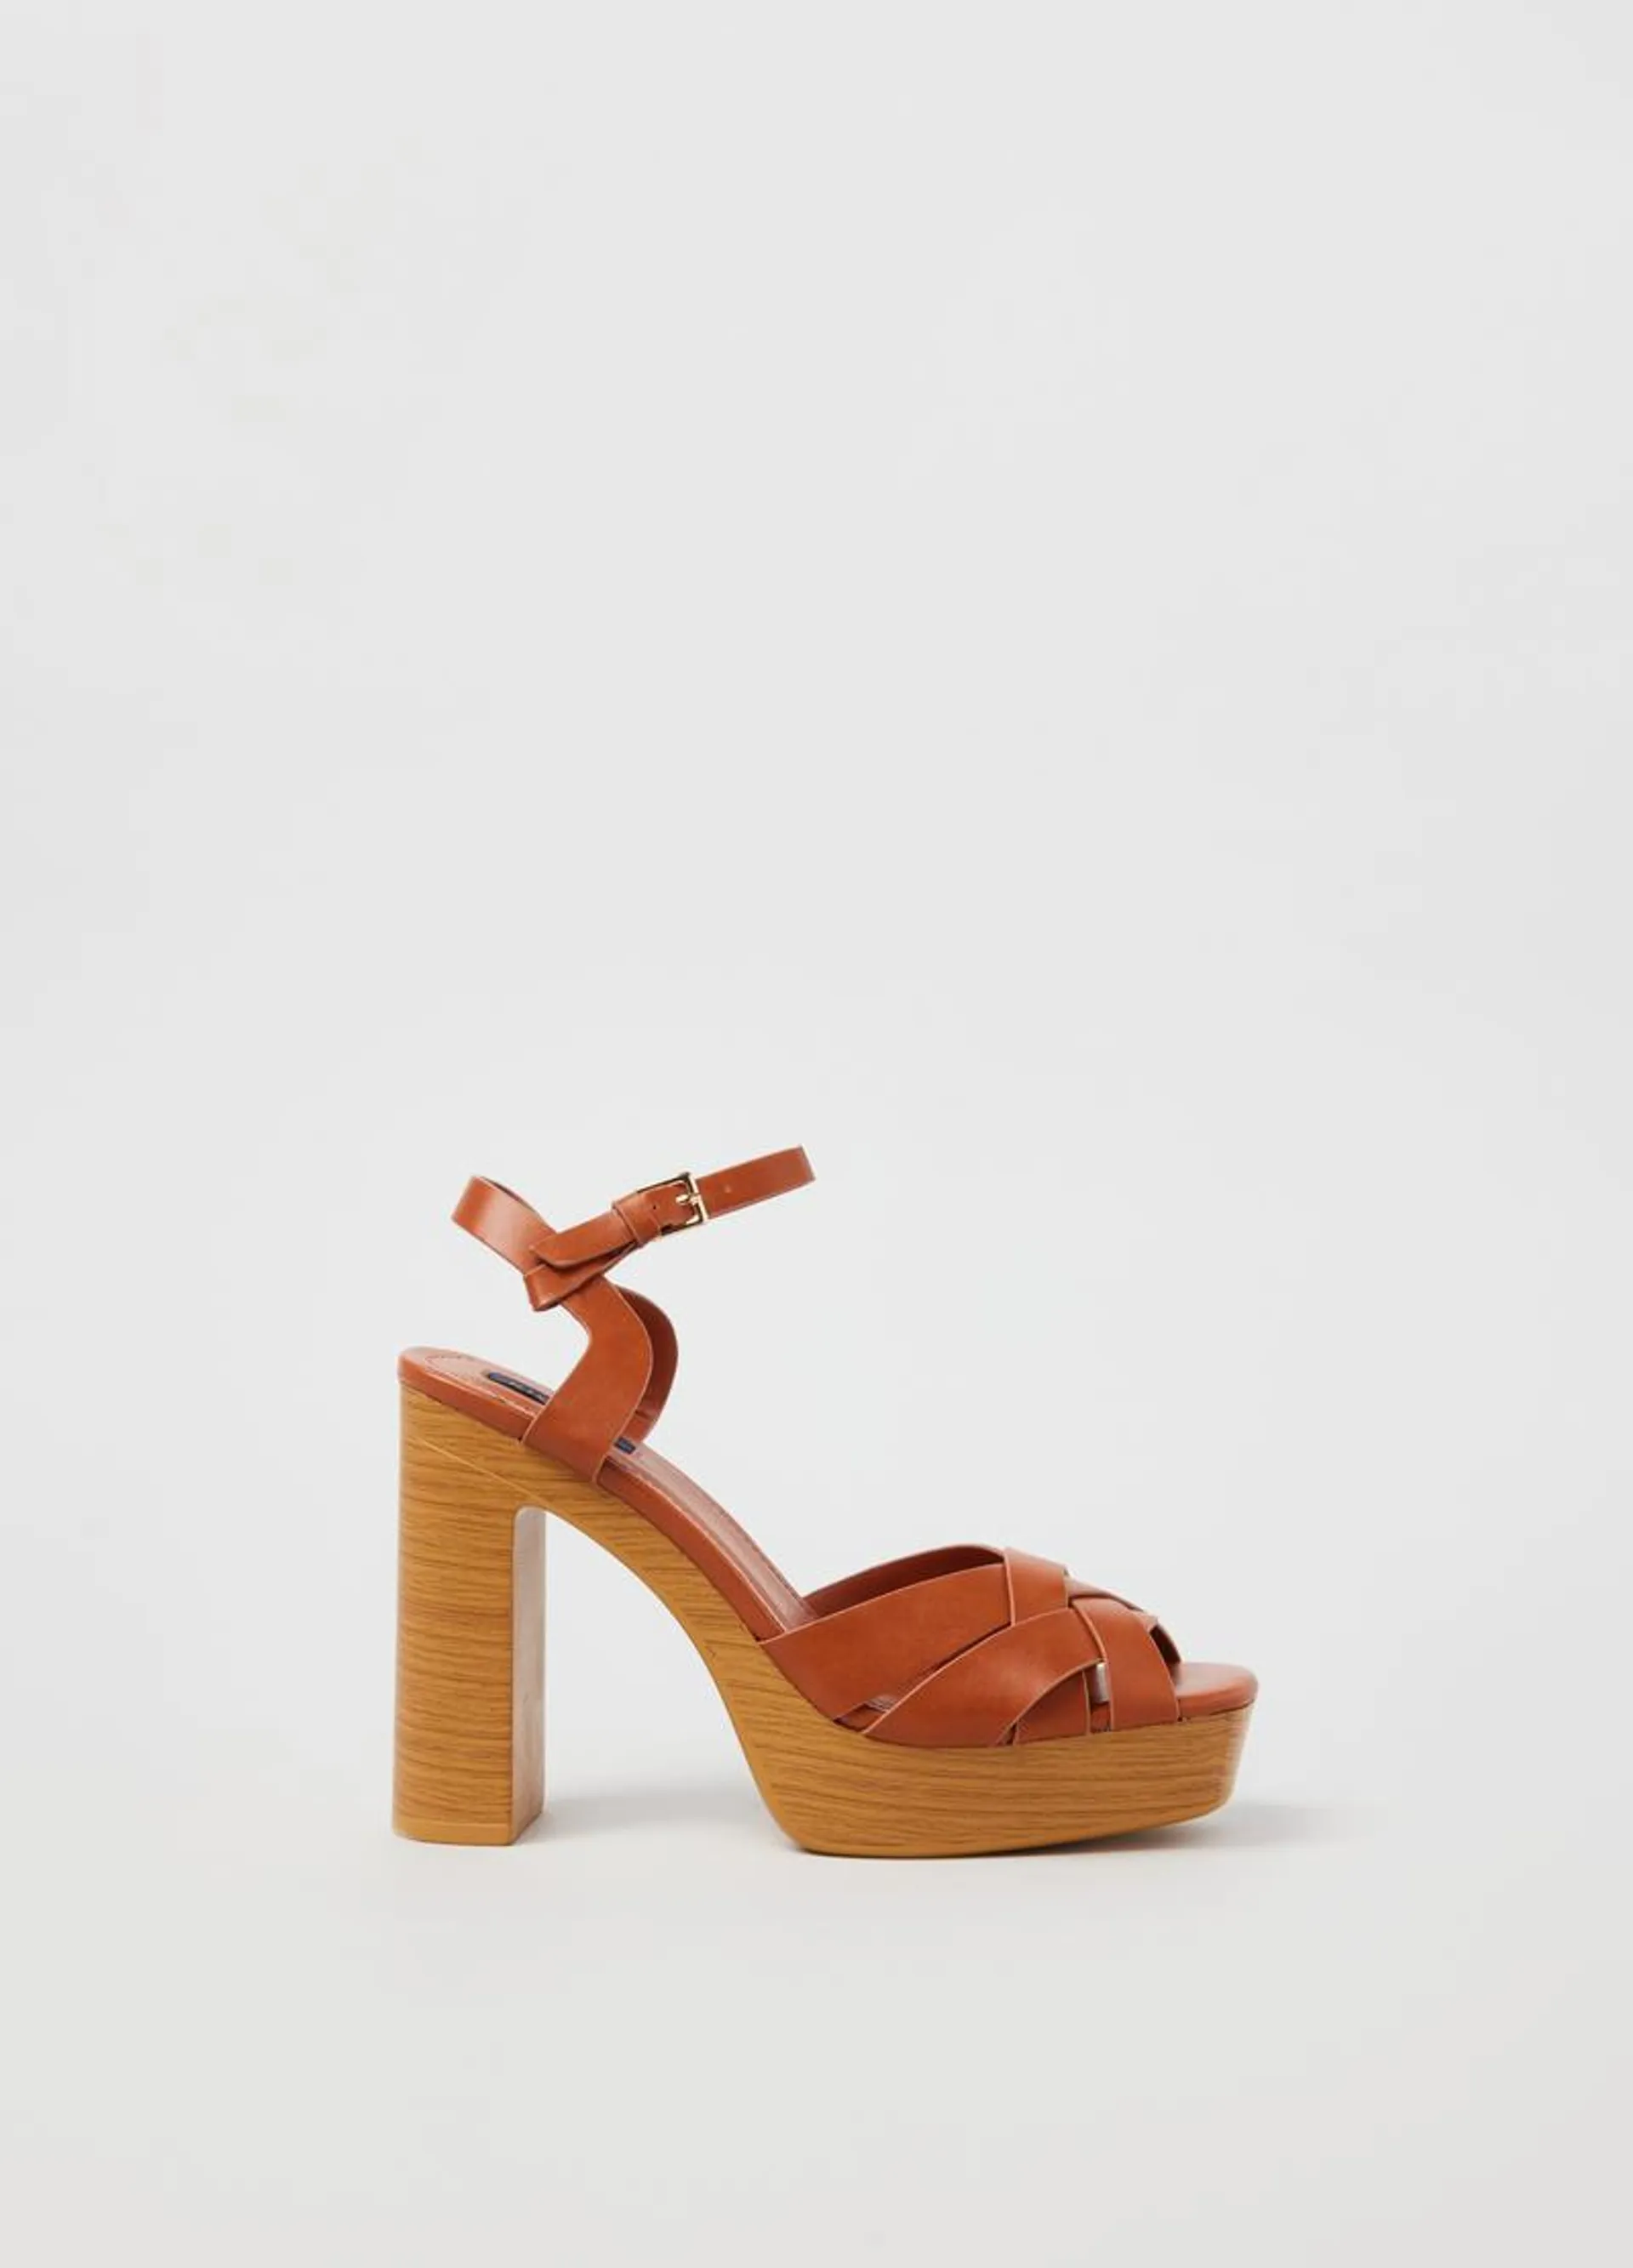 PIOMBO sandals with platform